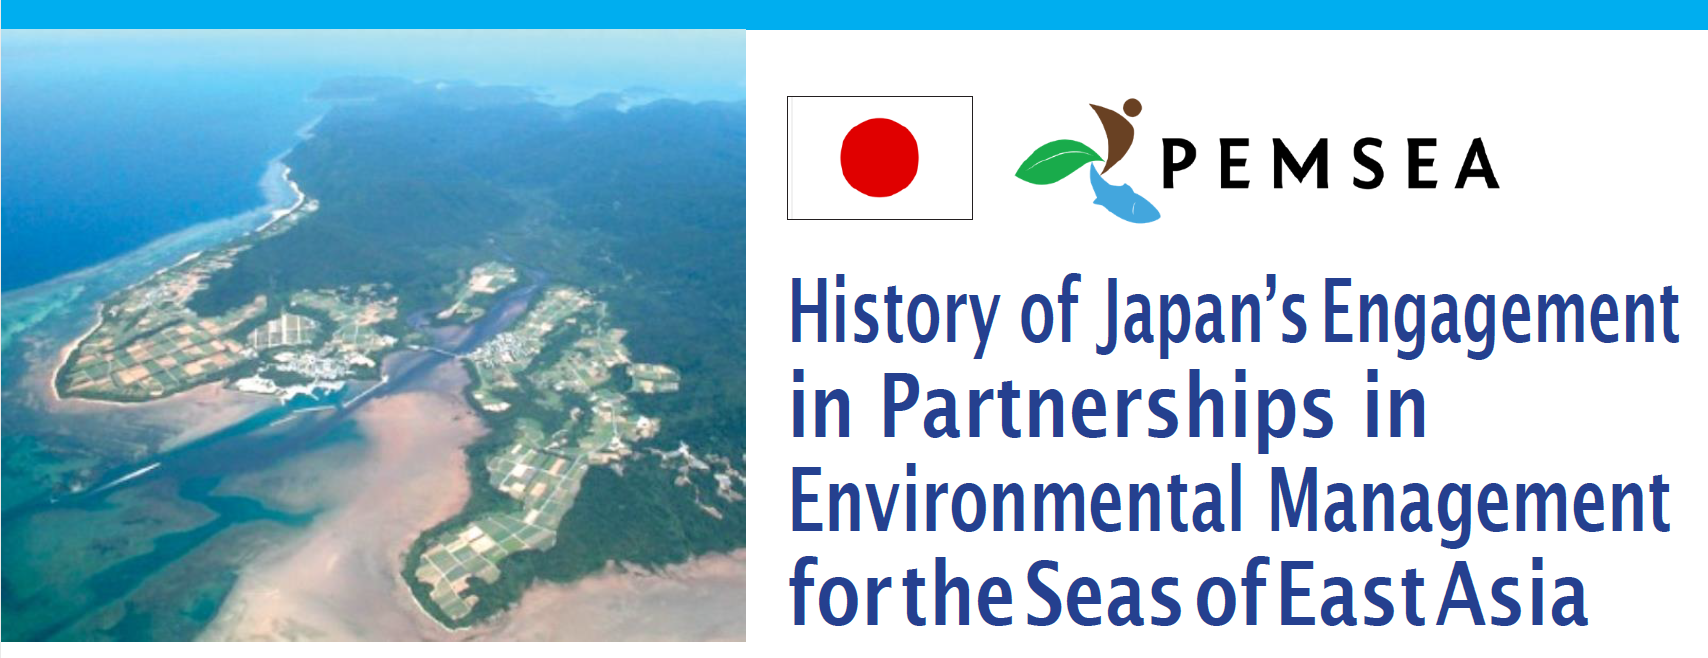 History of Japan’s Engagement in PEMSEA